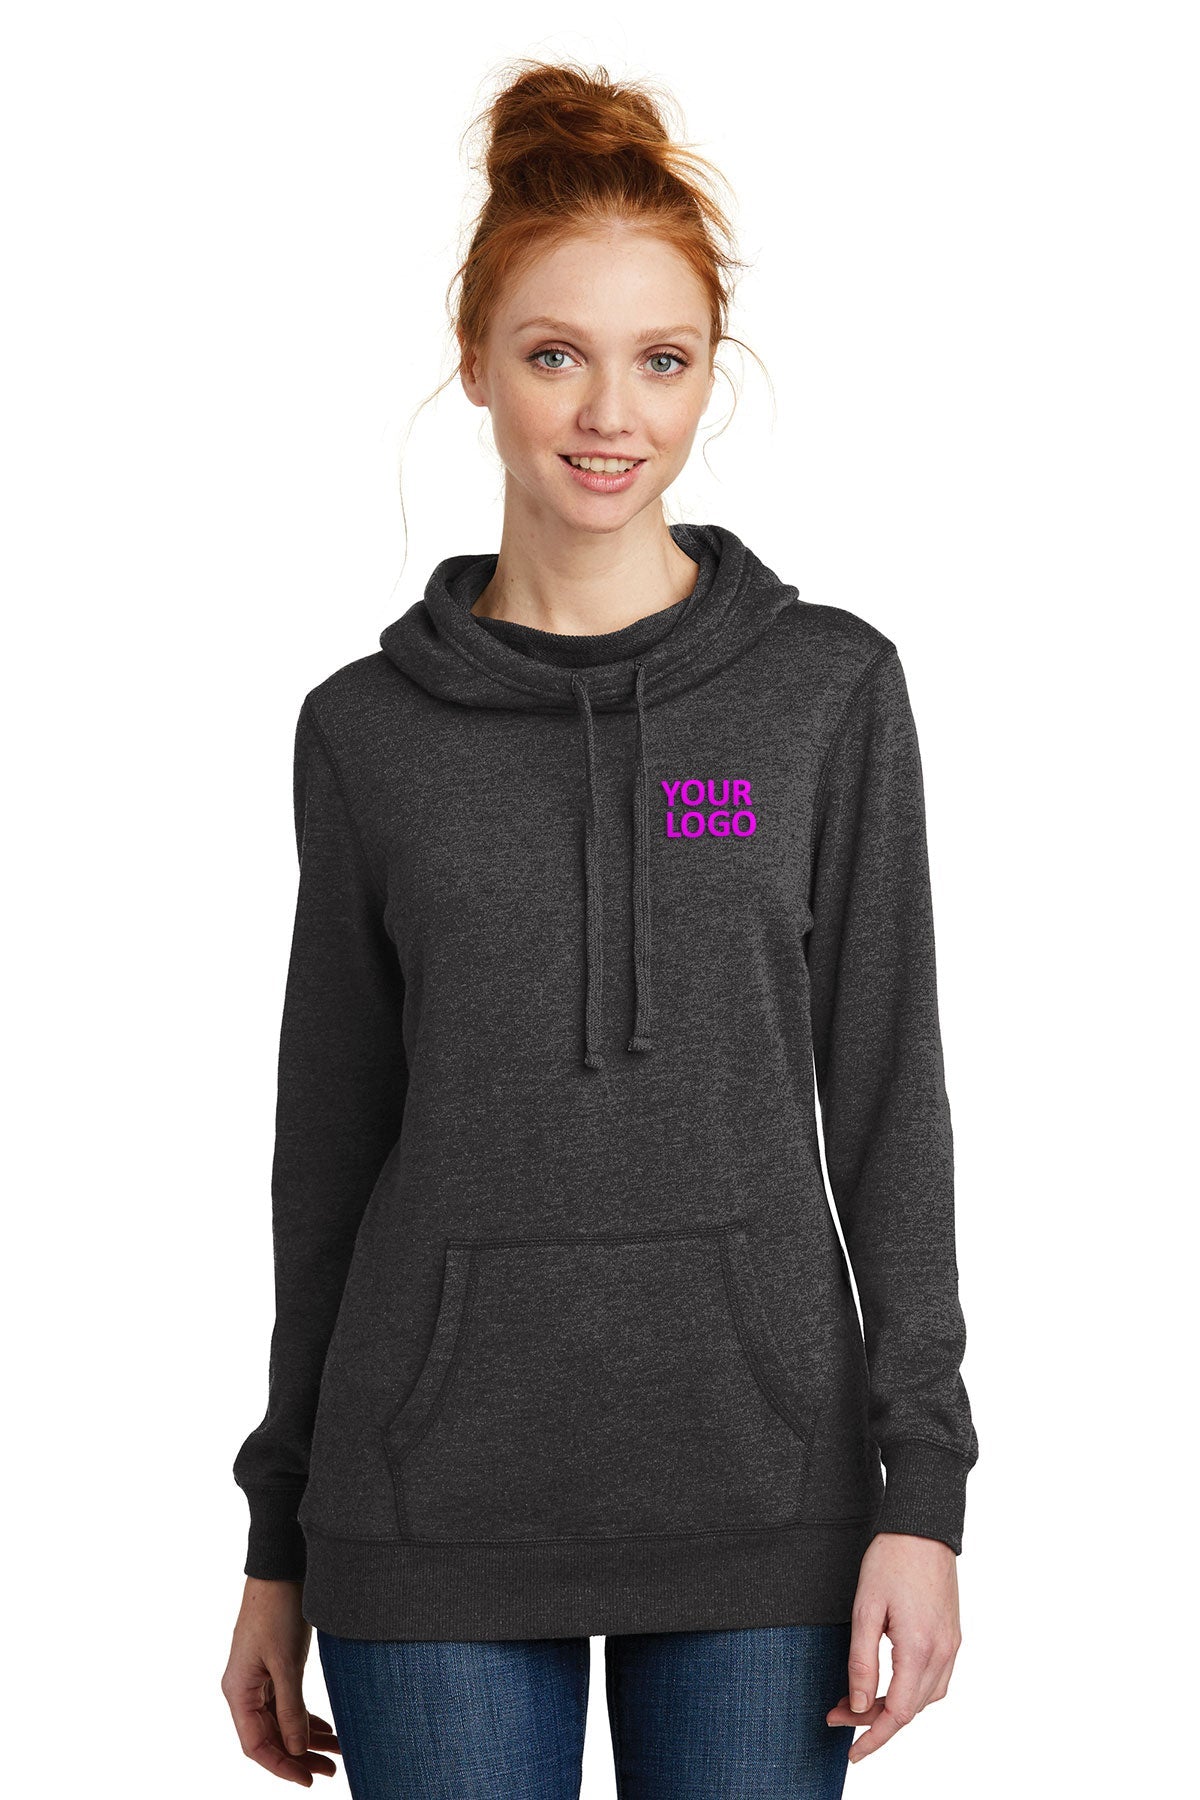 district made heathered black dm493 custom logo sweatshirts